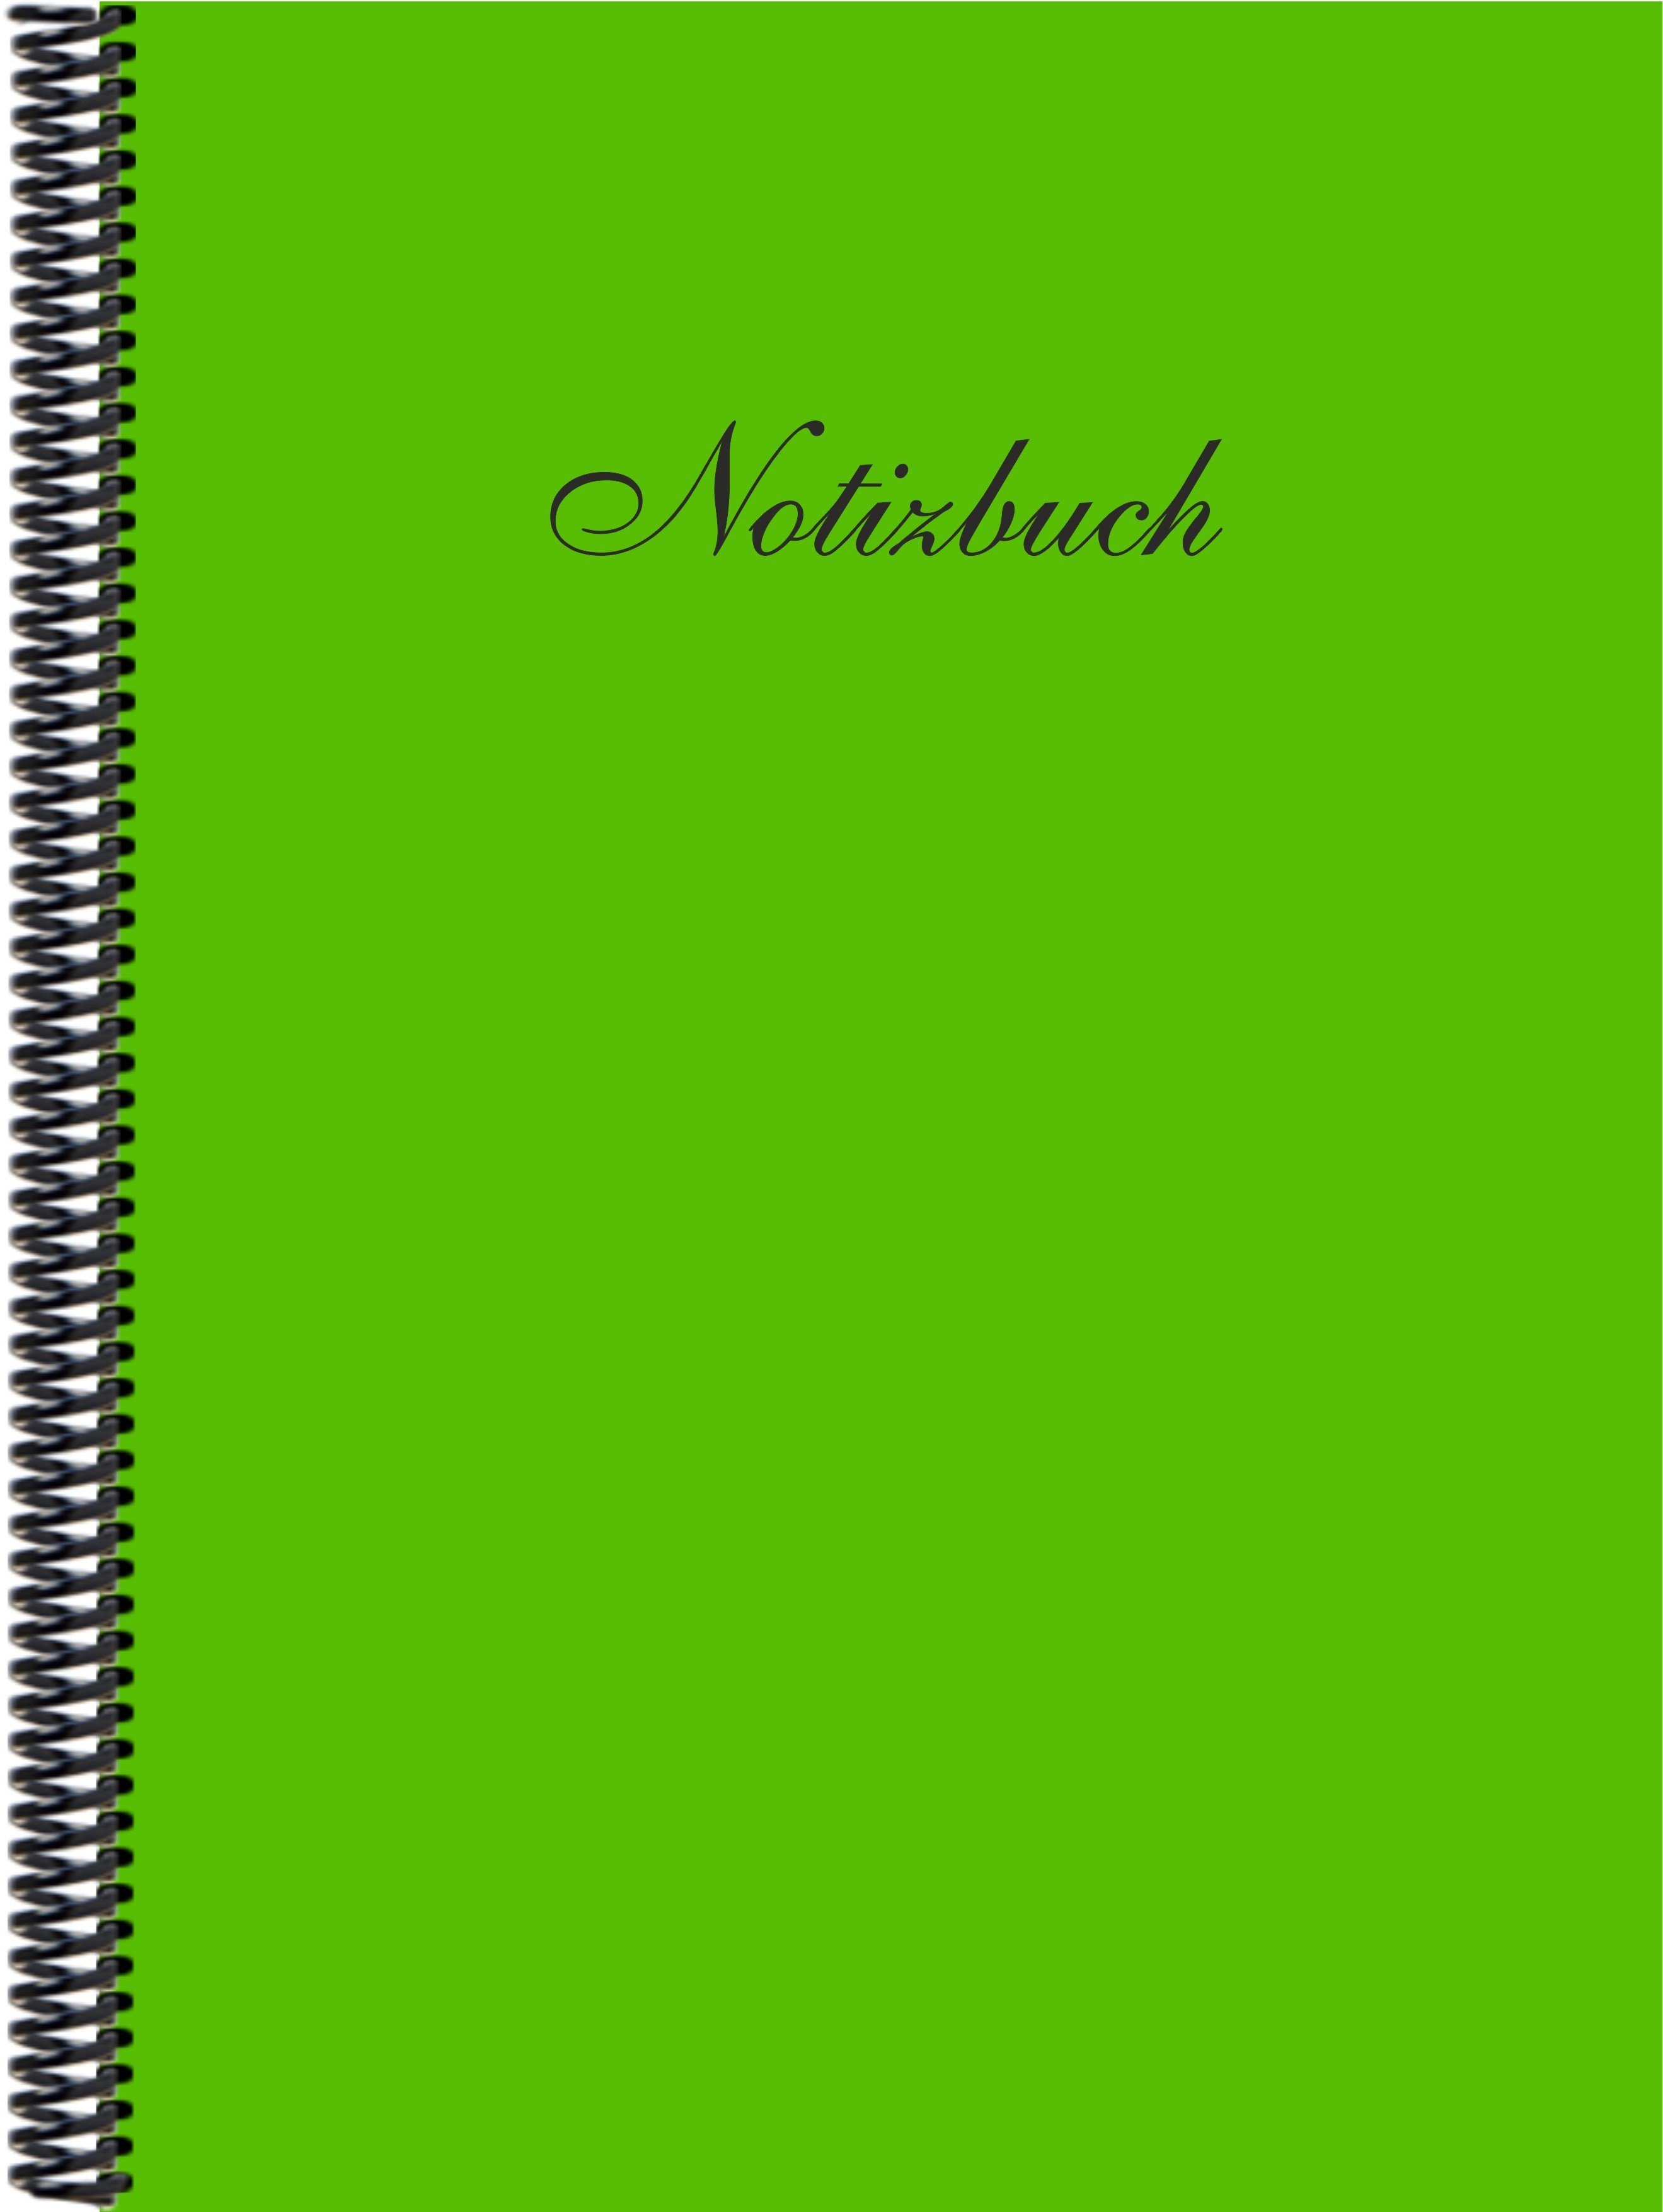 blanko, grasgrün Notizbuch DINA4 in der E&Z Gmbh Trendfarbe Verlag Notizbuch